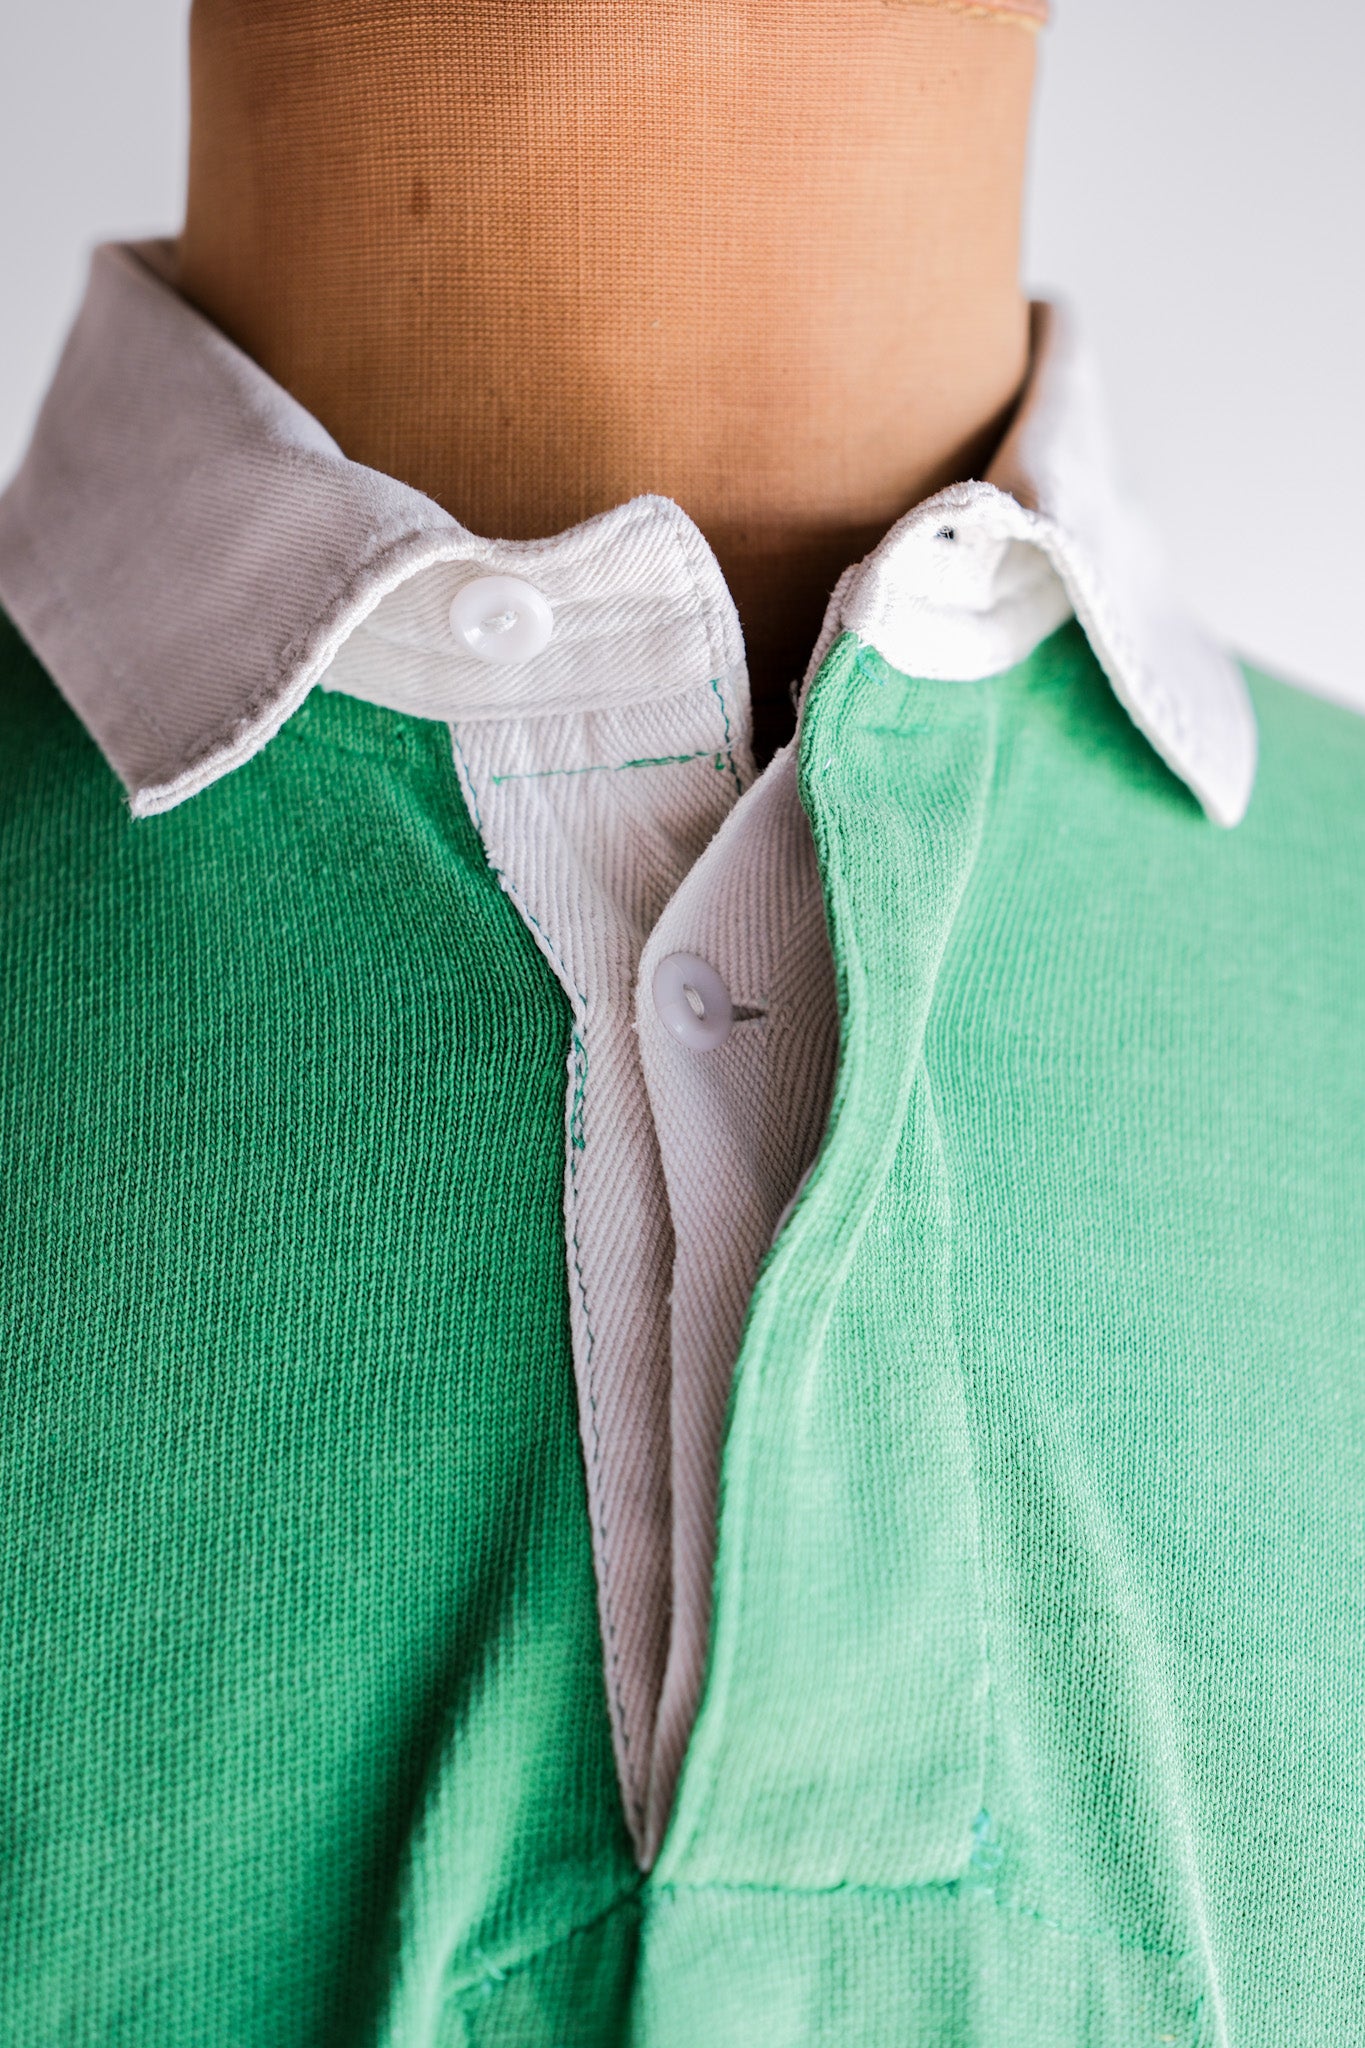 [~ 60's] British Vintage Numbering Rugger Shirt Taille.46 "Umbro" "Boro"